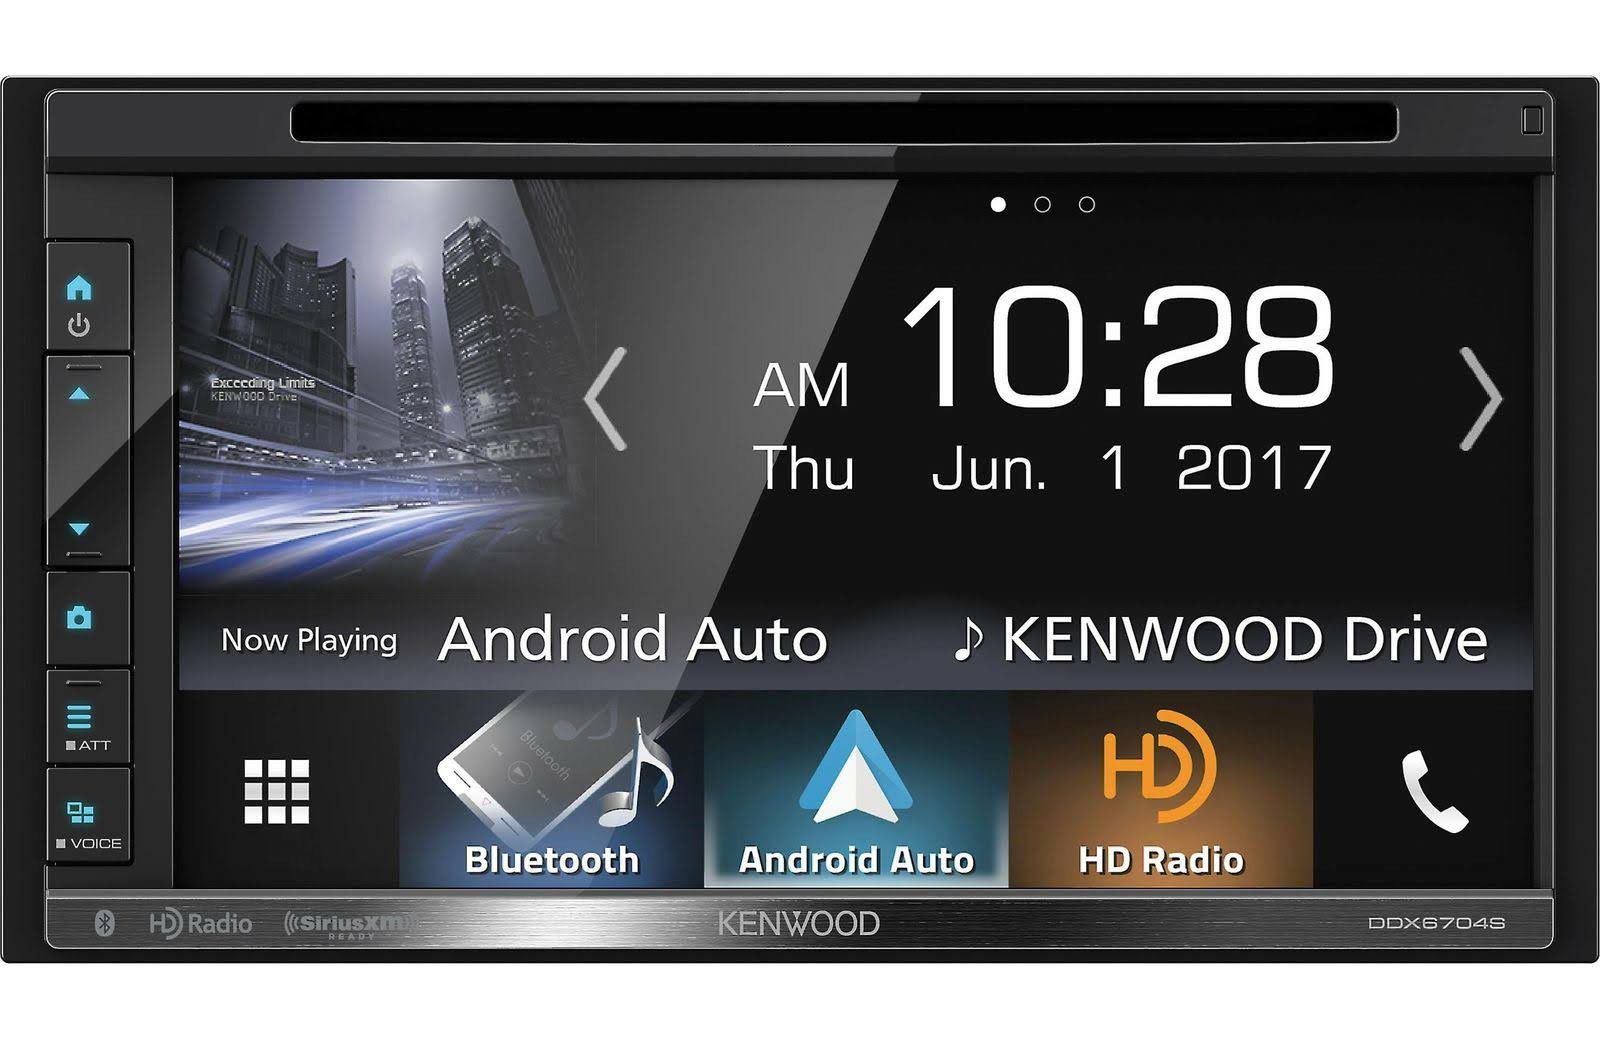 Kenwood(DDX6704S)6.8 inch touchscreen multimedia reciever